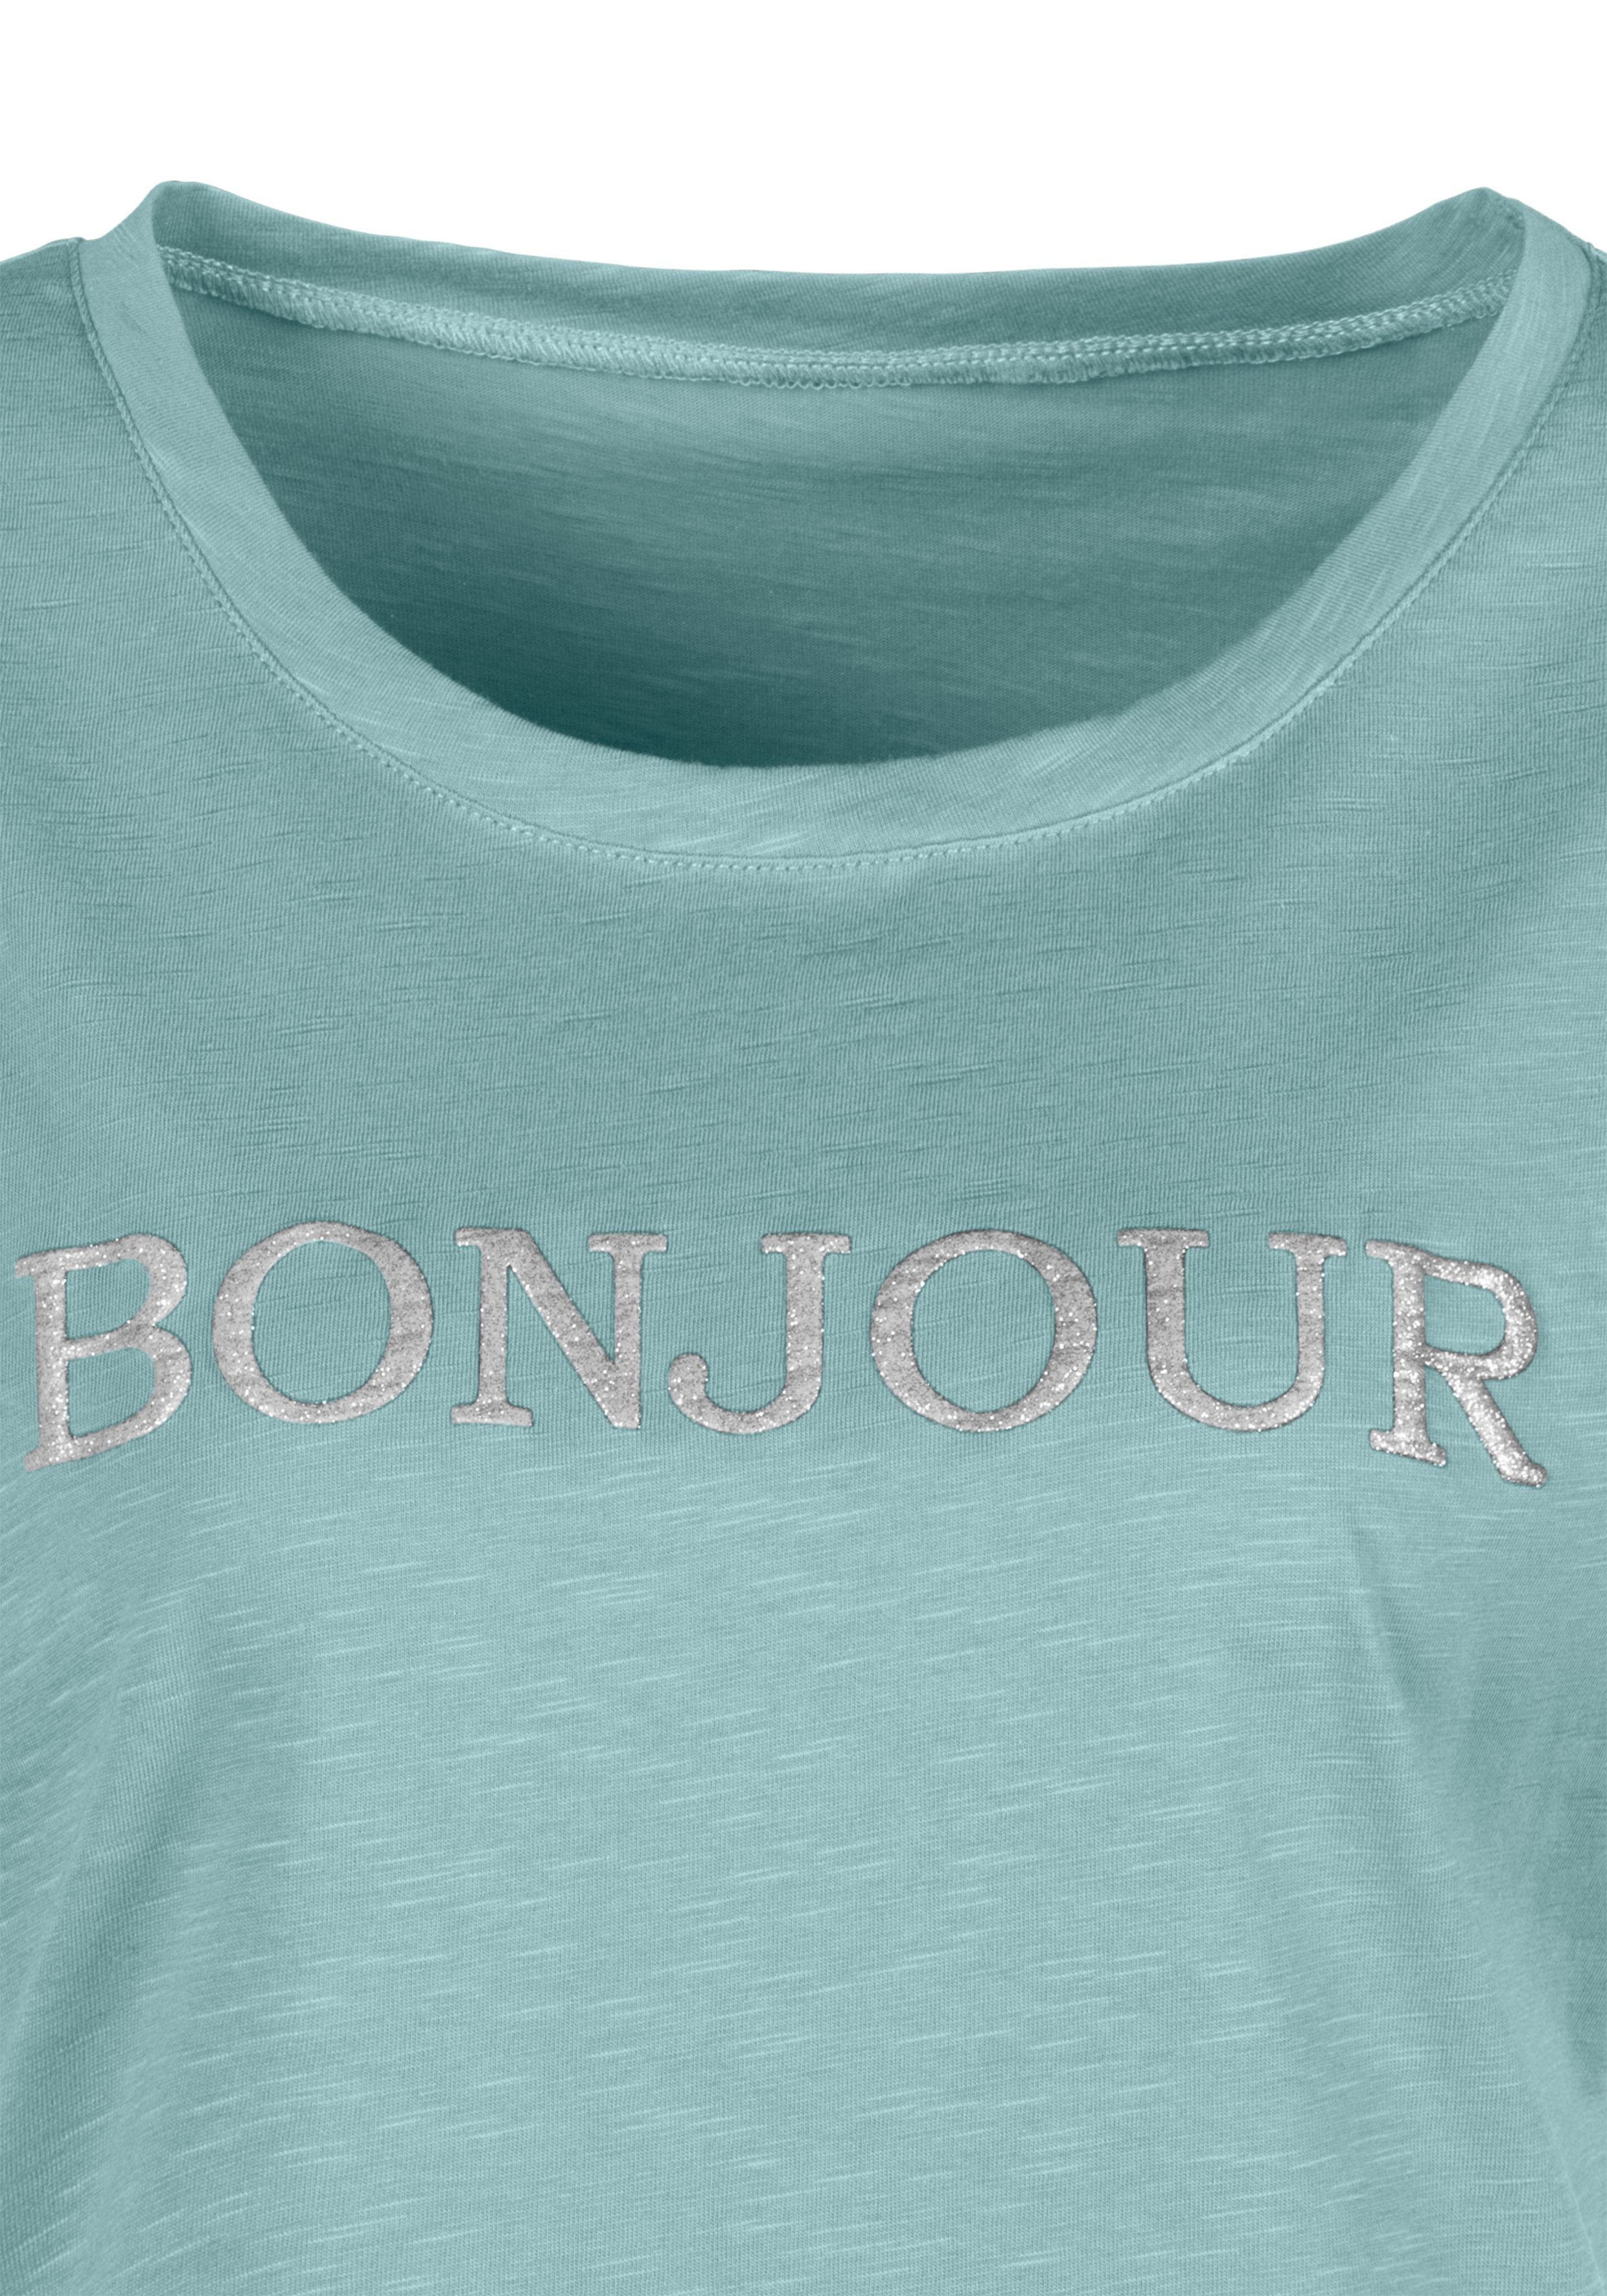 Vivance T-Shirt "Bonjour" mint modischem Frontdruck mit